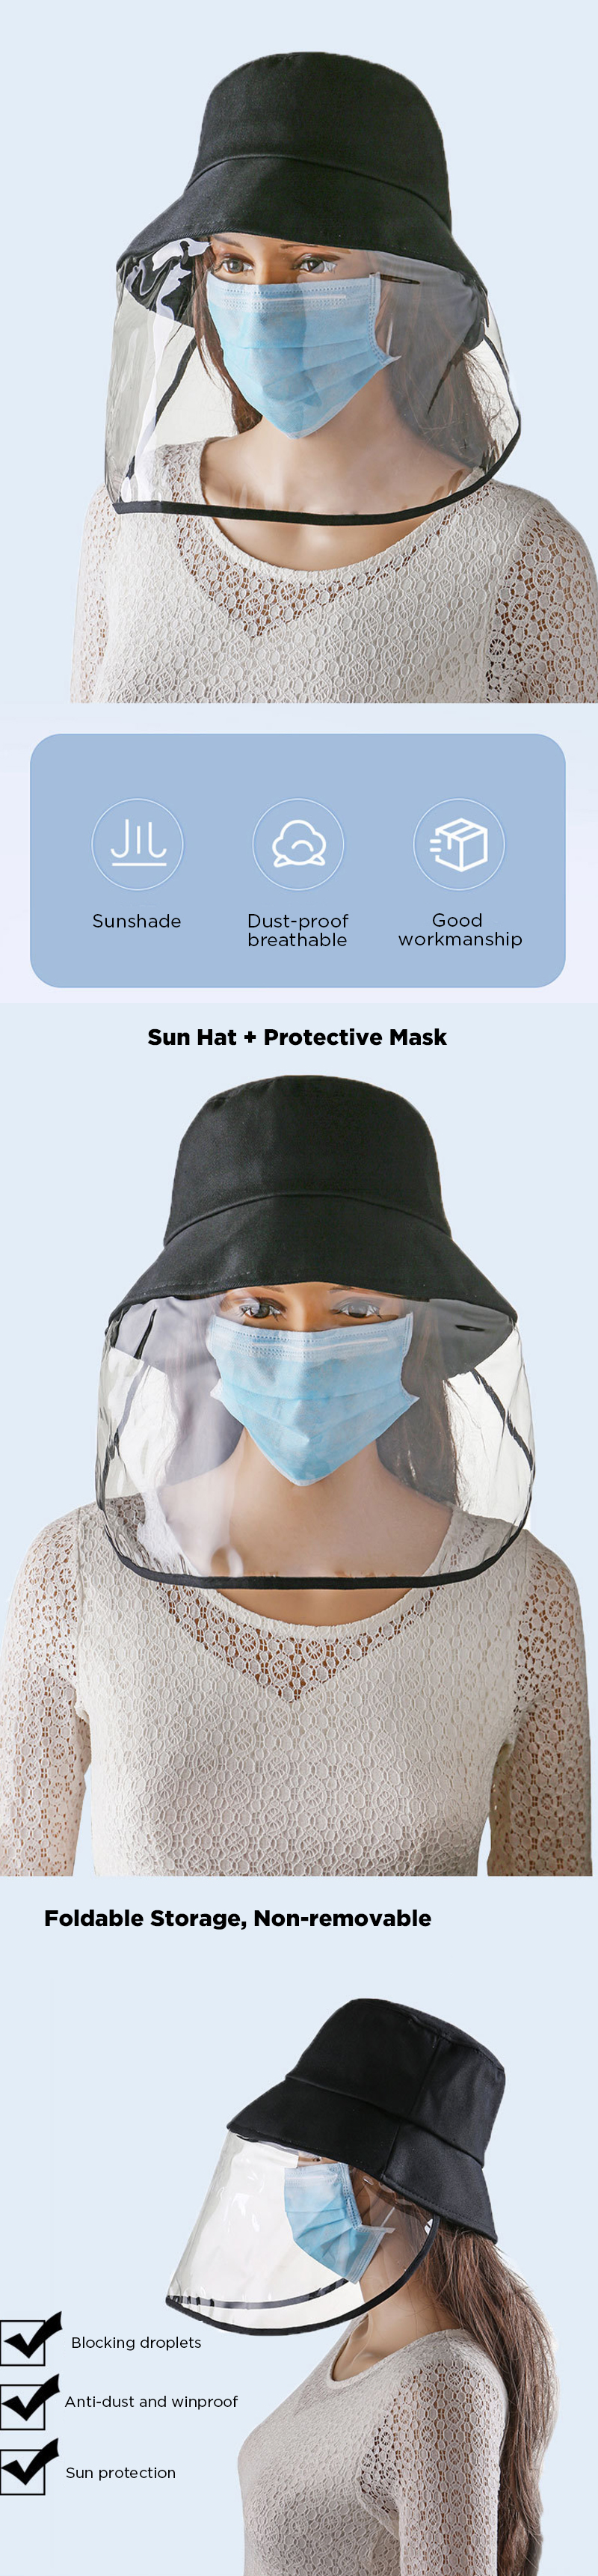 ZANLURE-Unisex-Anti-fog-Dust-proof-Sunshade-Splash-proof-Complete-Protective-Mask-Fisherman-Hat-1652757-1